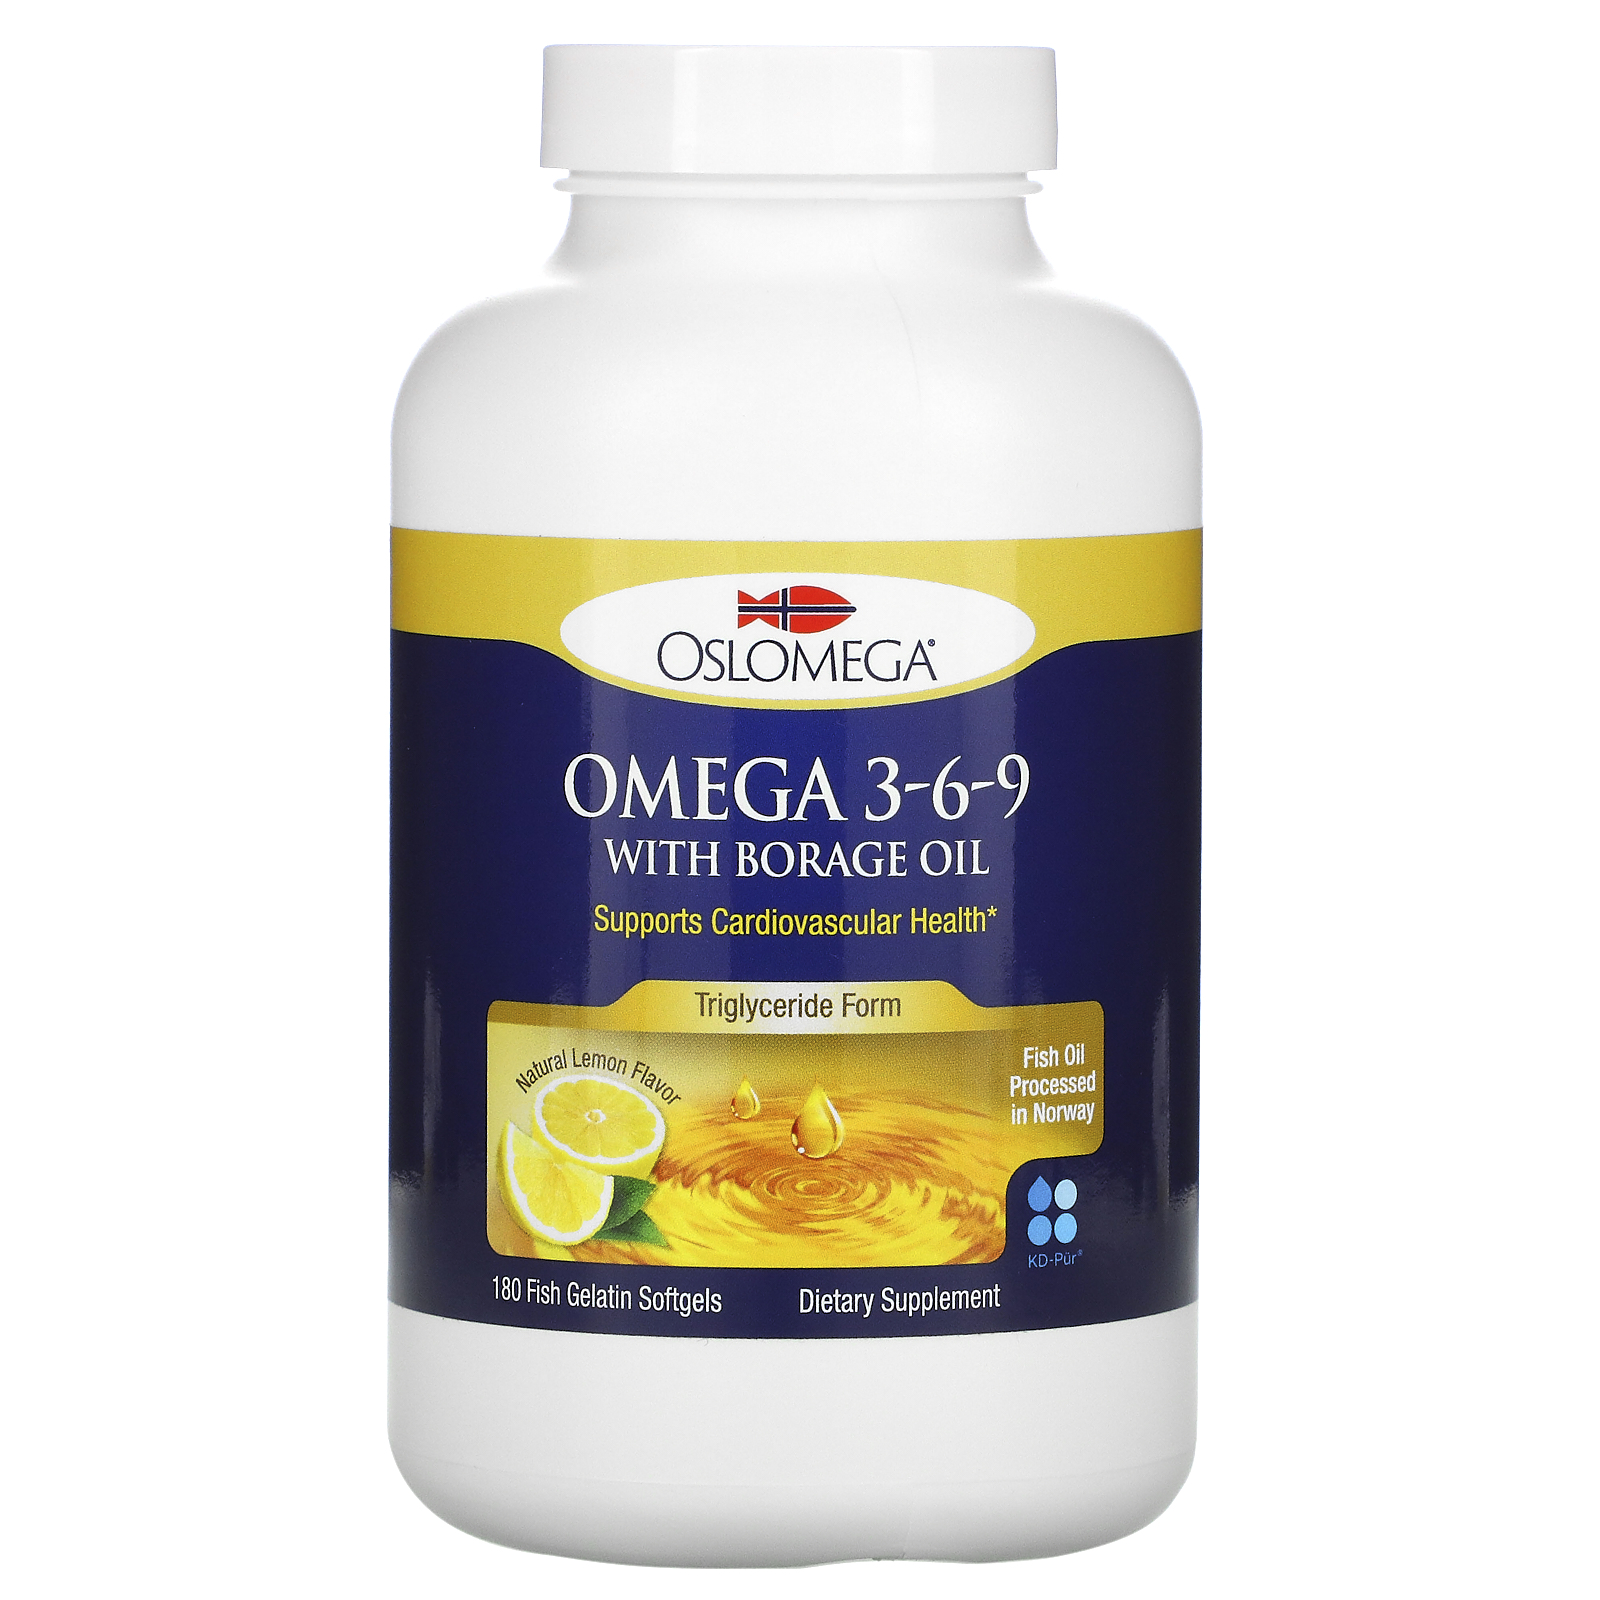 Mislukking Hij vod Oslomega, Norwegian Omega 3-6-9 with Borage Oil, Lemon Flavor, 180 Fish  Gelatin Softgels